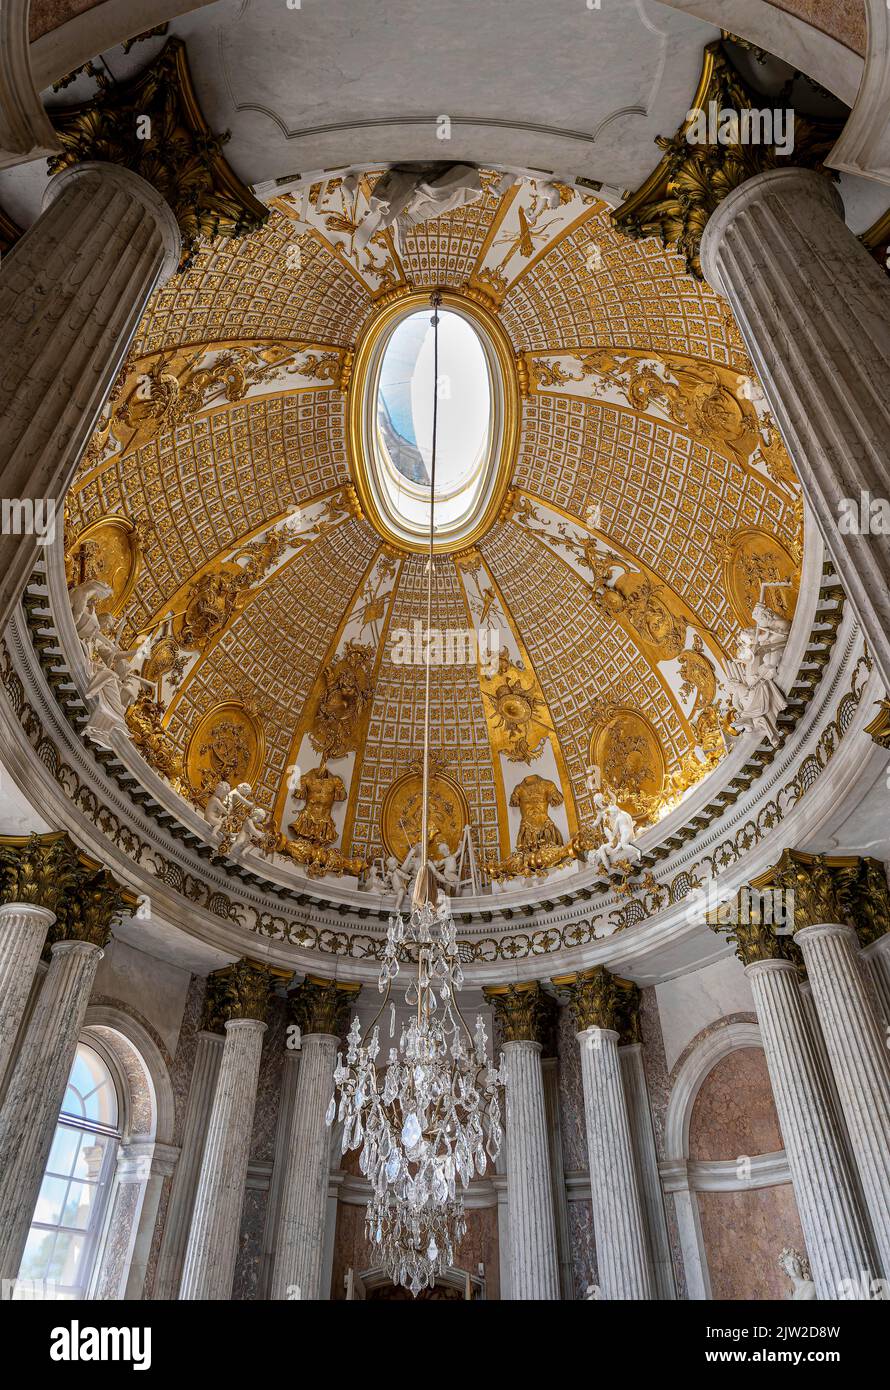 Ceiling vault in the Marble Hall, Sanssouci Palace, Potsdam, Brandenburg, Germany Stock Photo